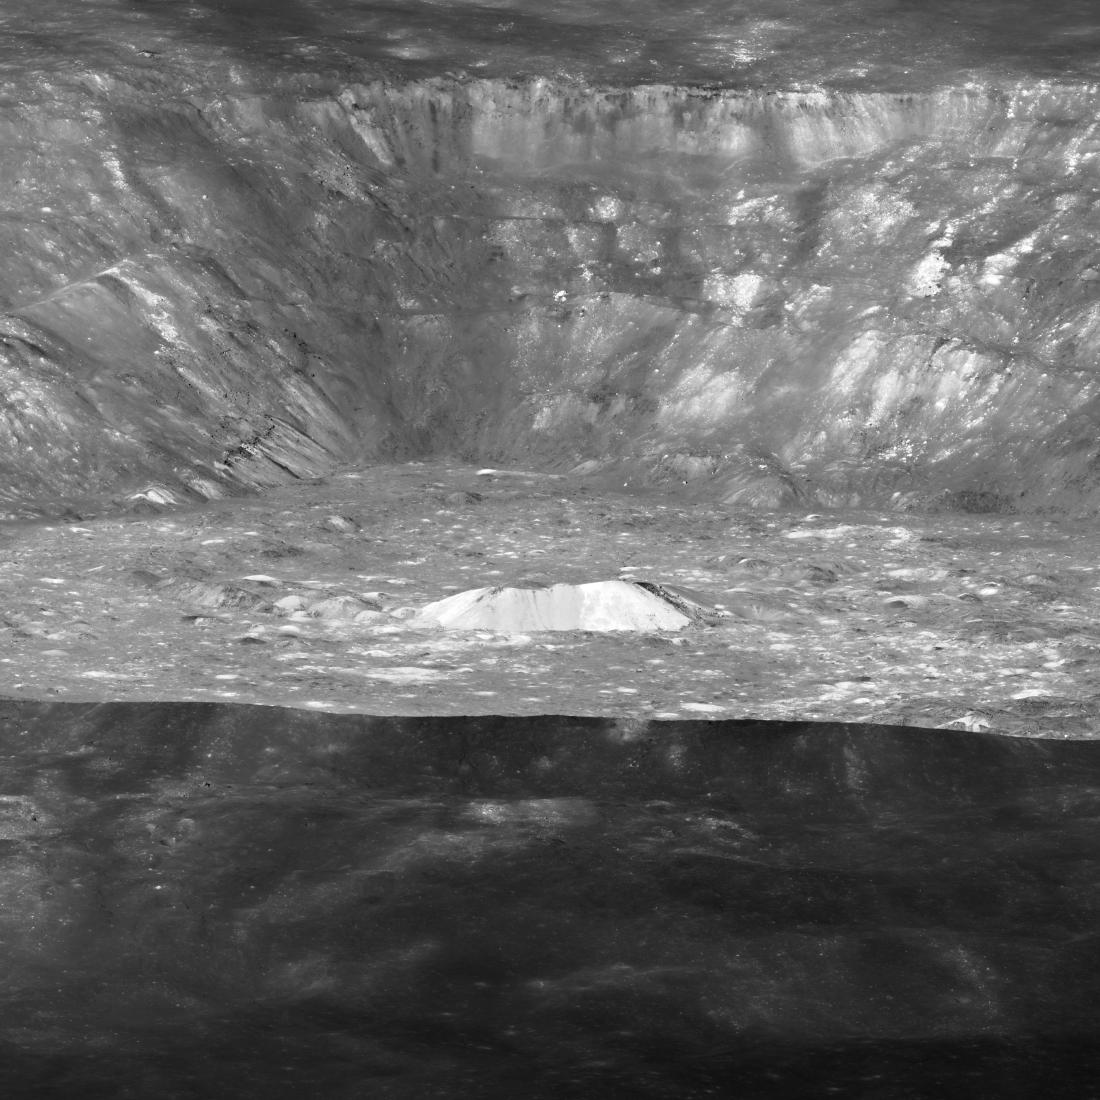 Central peak of Aristarchus crater seen obliquely